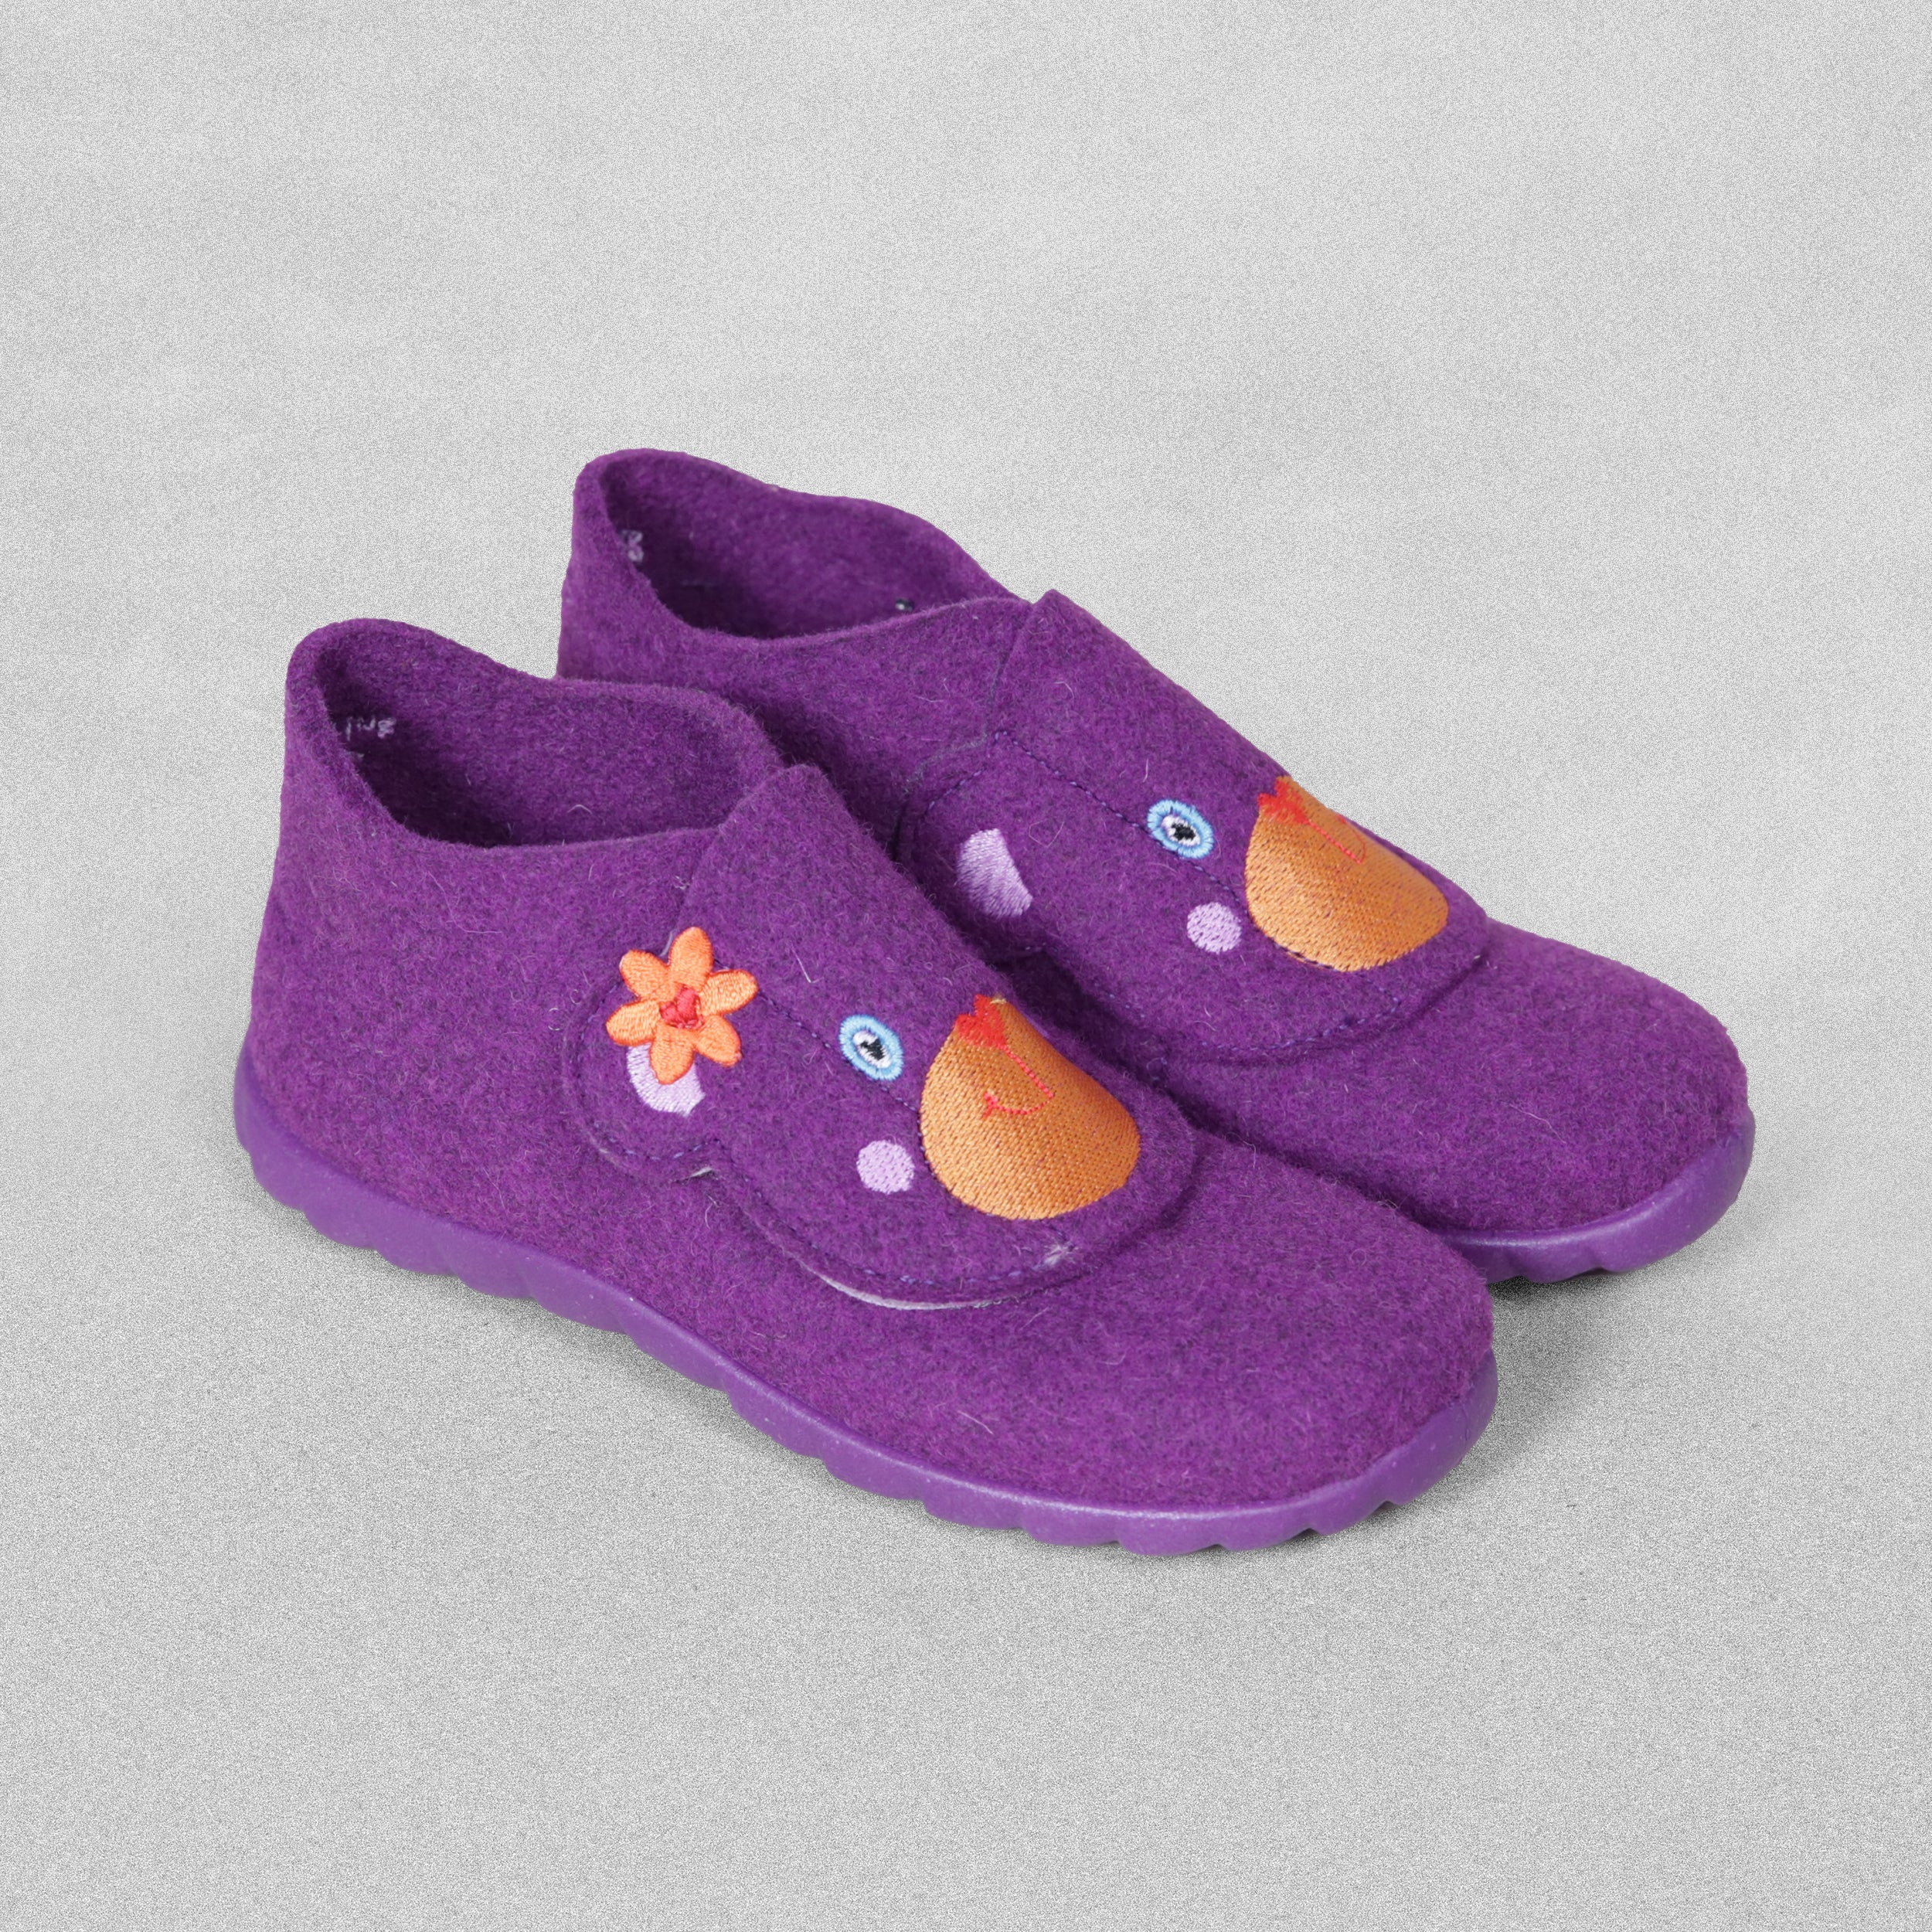 Superfit Girls' Purple Happy Slipper UK Child Size 10.5 / EU 29